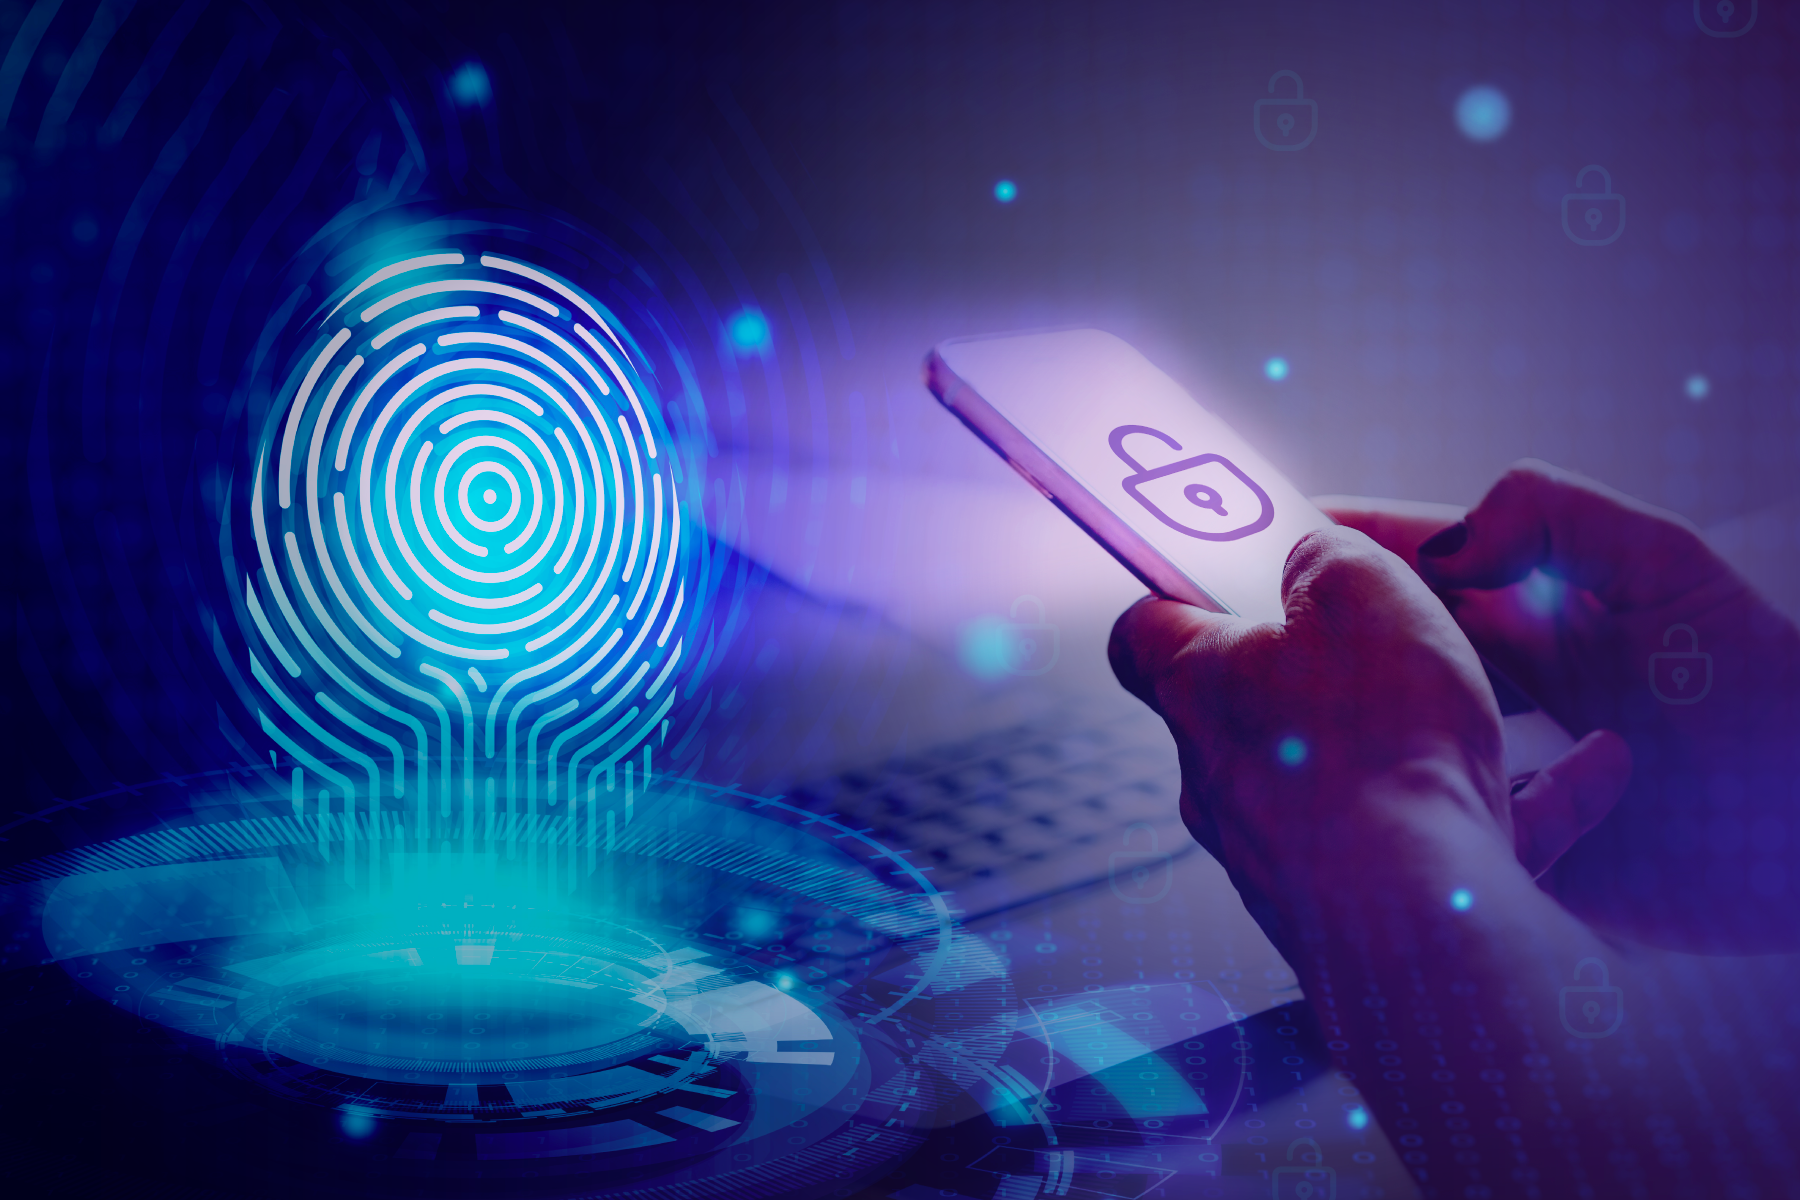 Trusted Digital Identities and biometrics